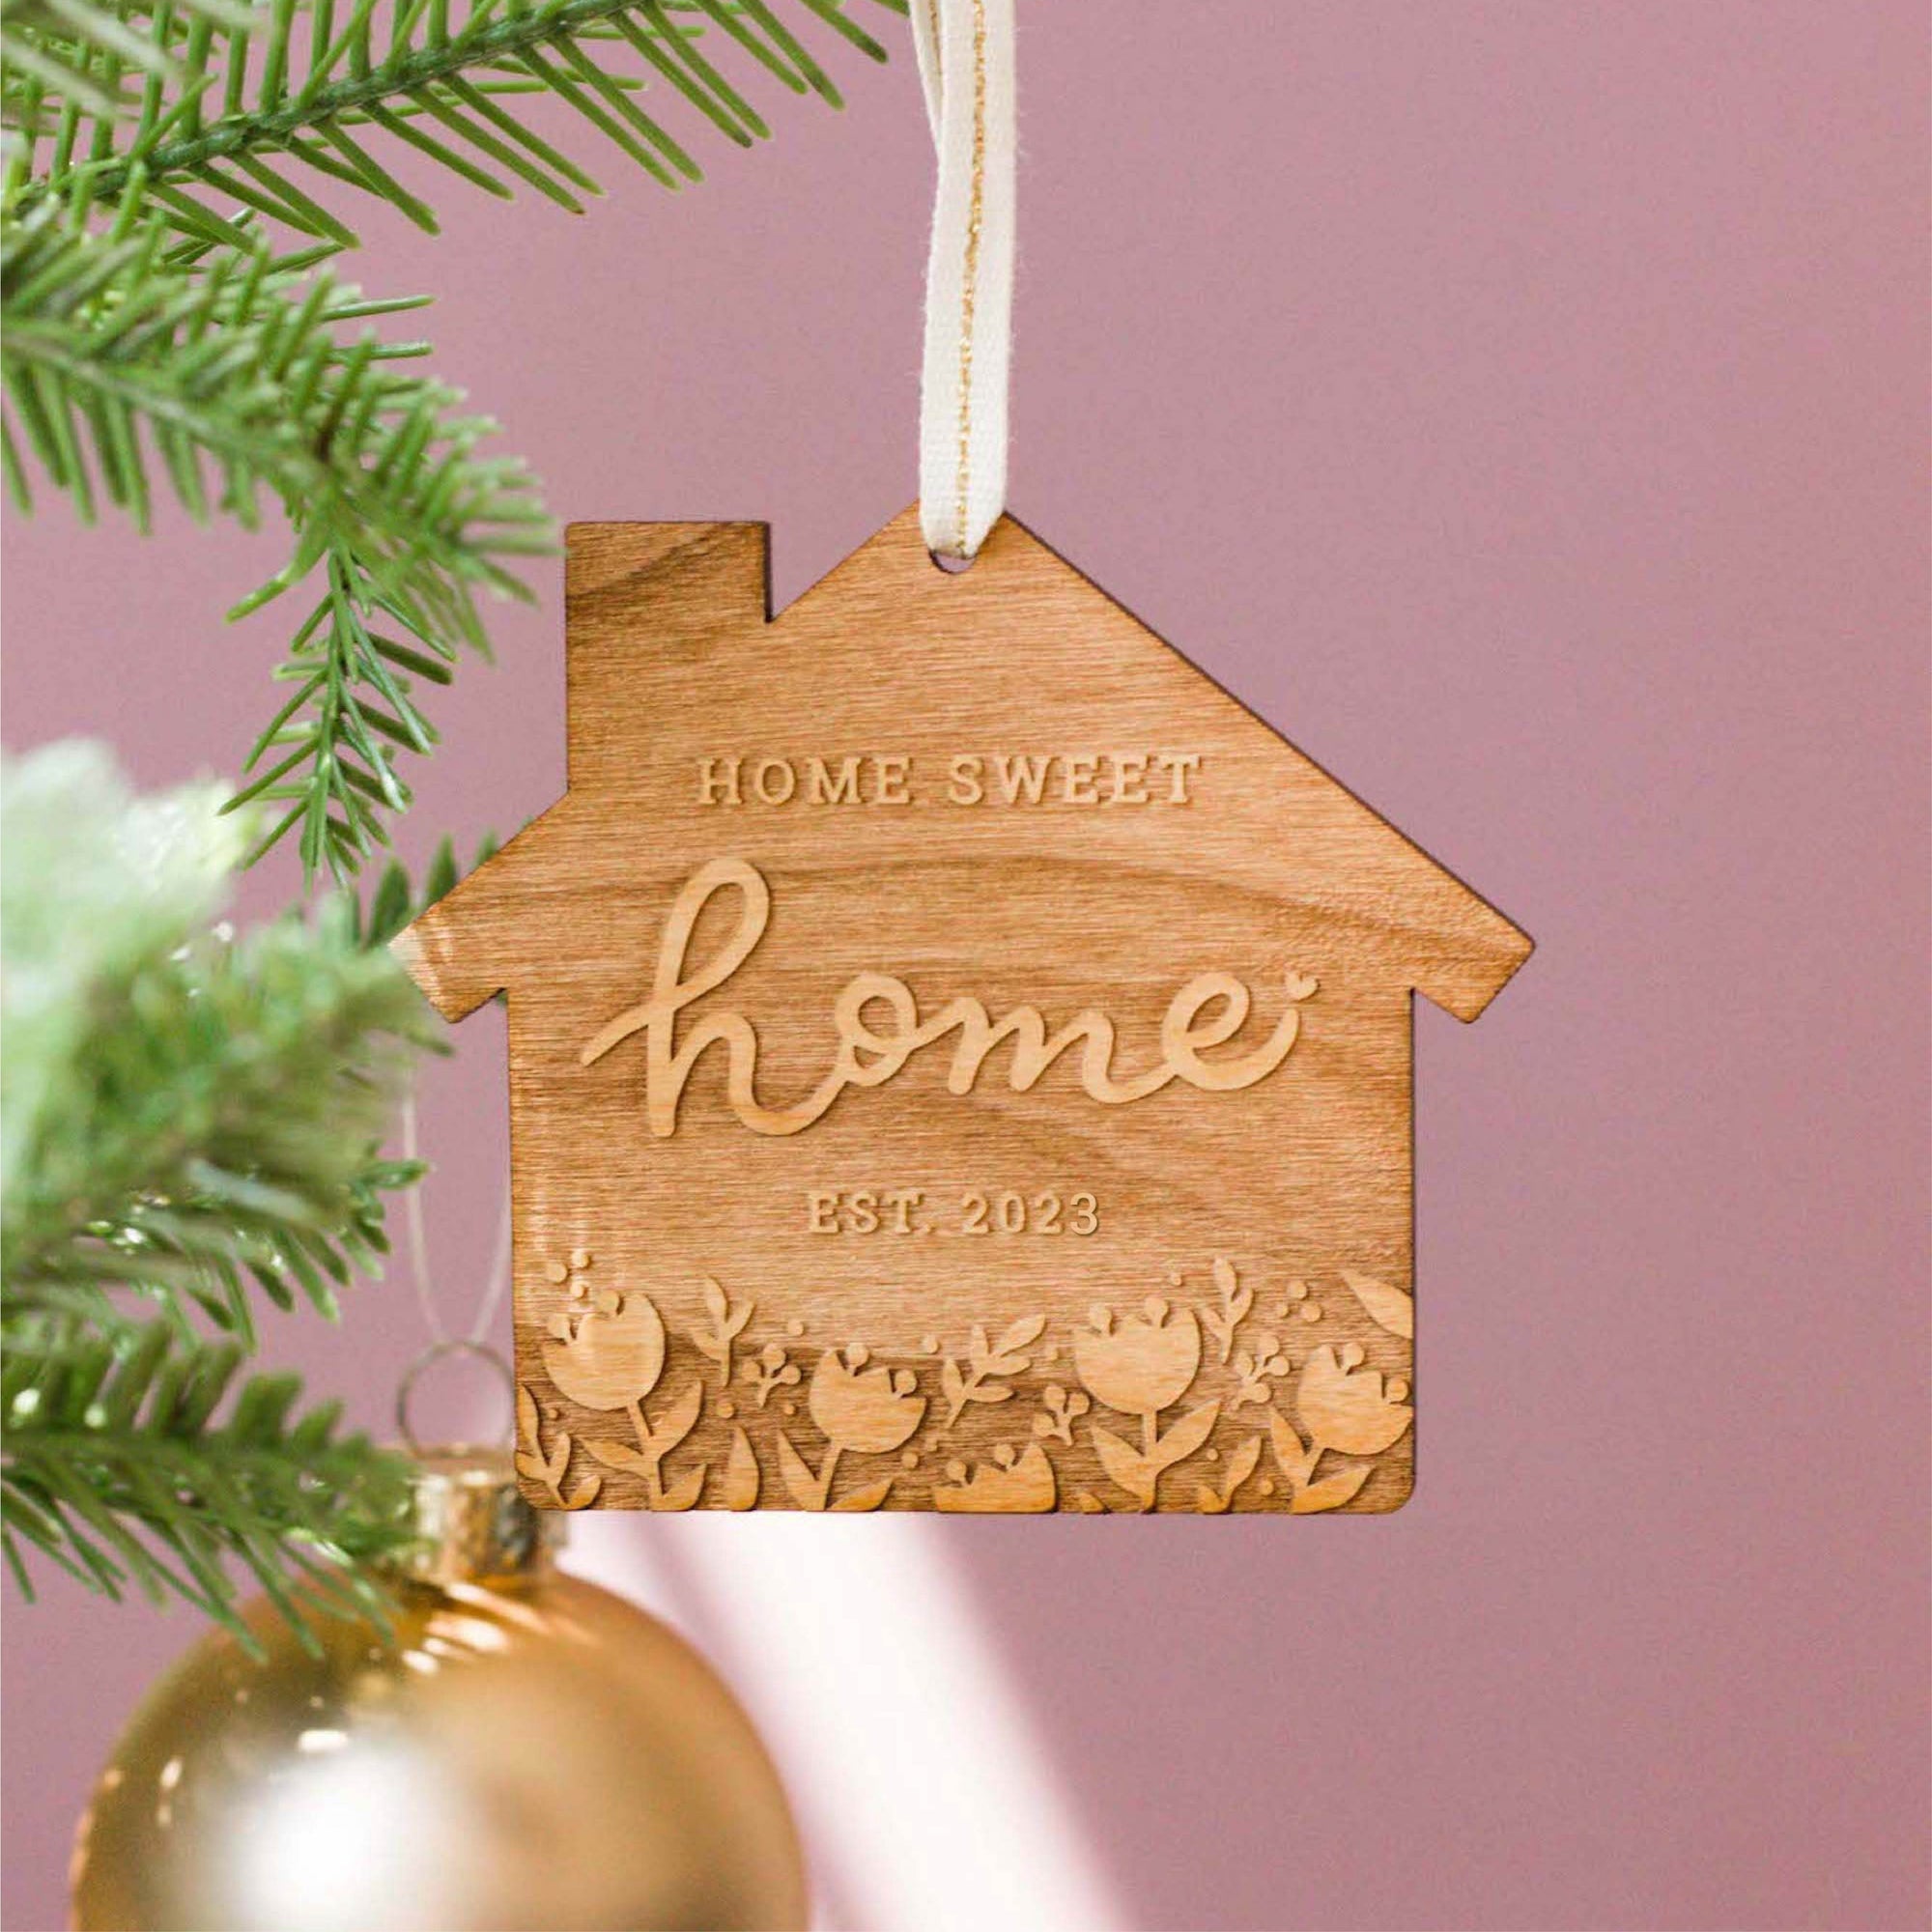 Home Sweet Home – EST. 2023 Ornament